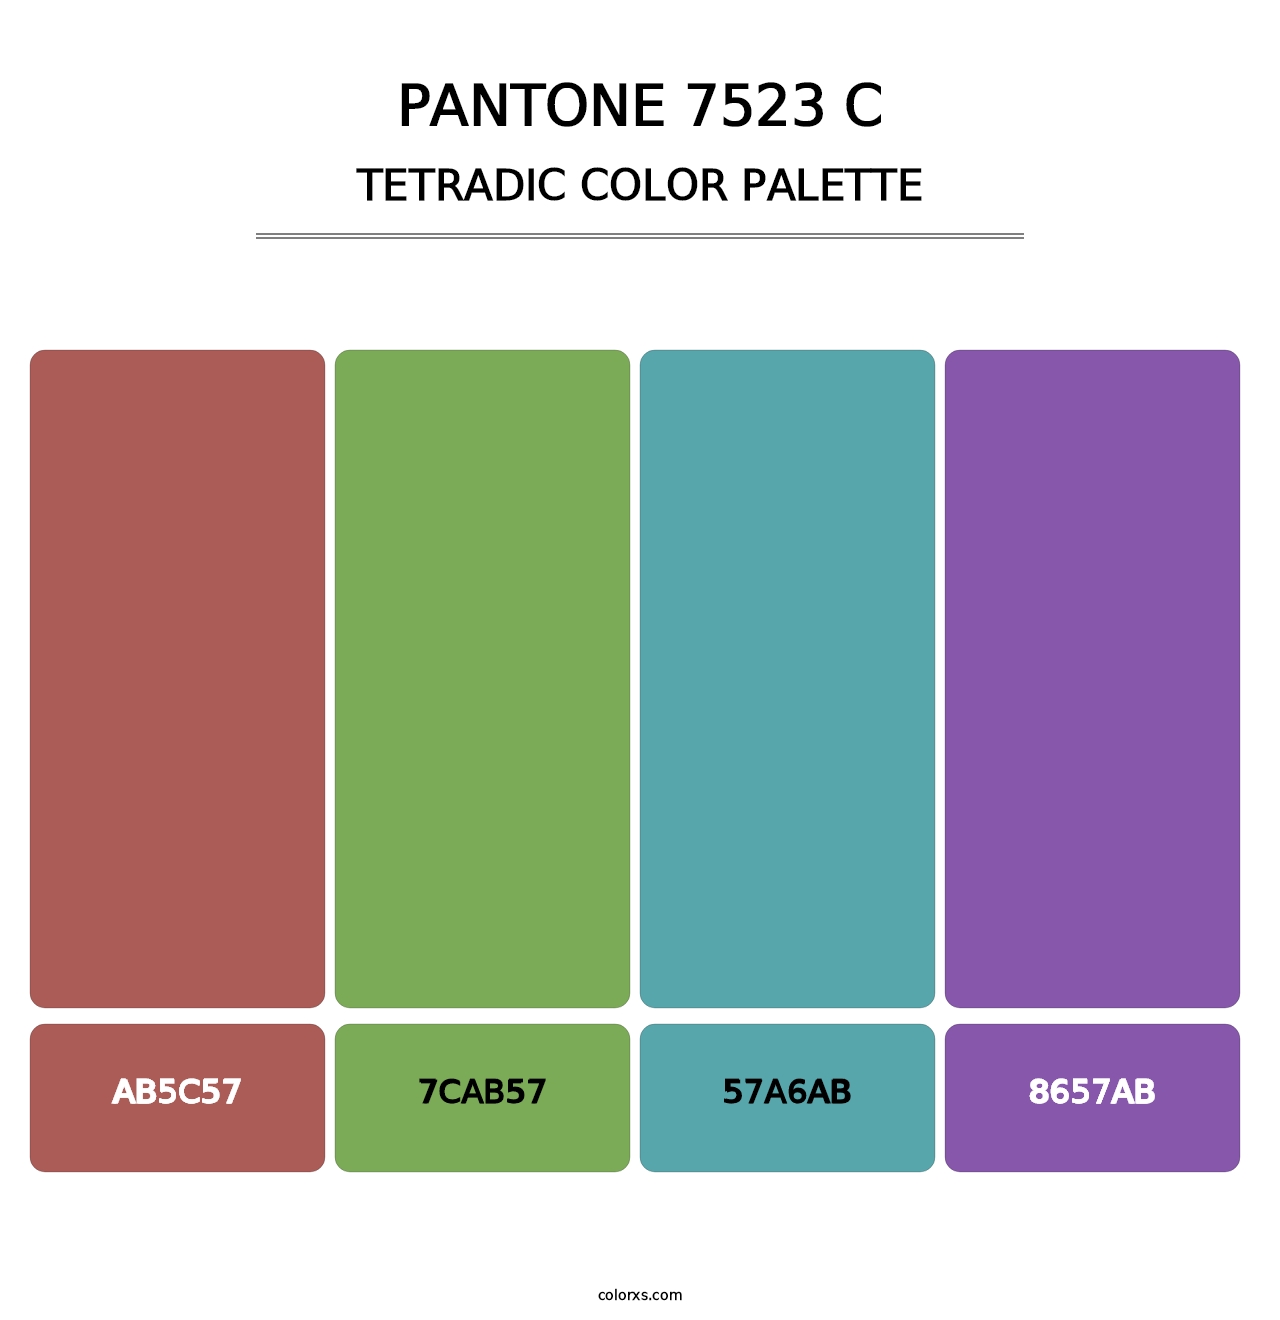 PANTONE 7523 C - Tetradic Color Palette